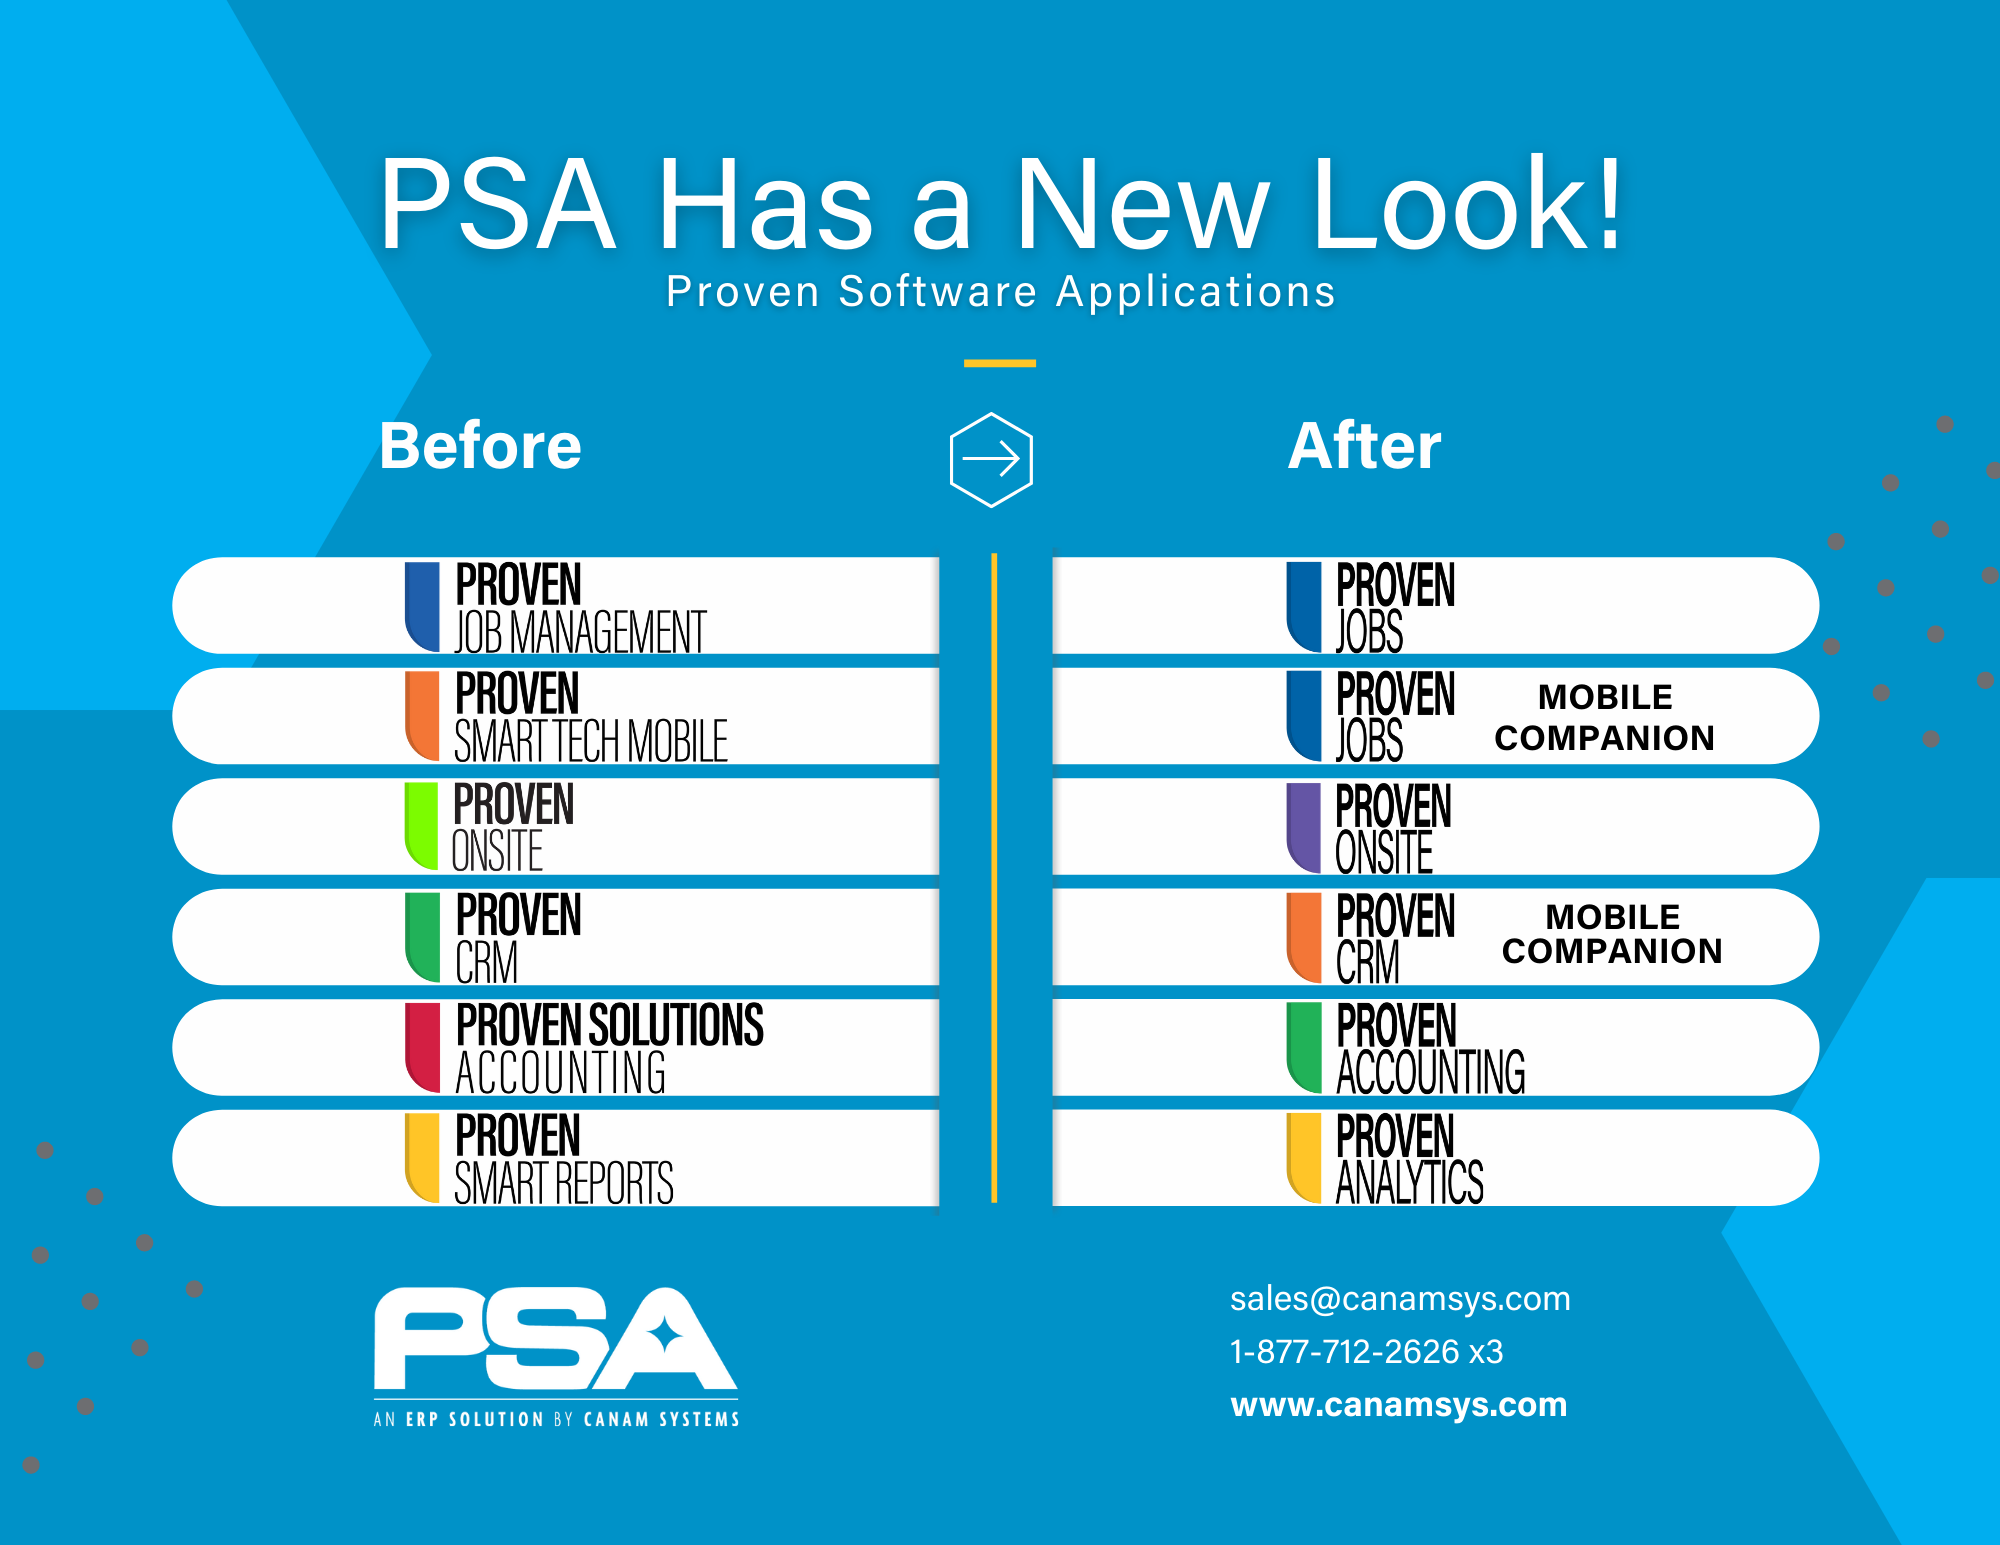 PSA now has a new brand identity!